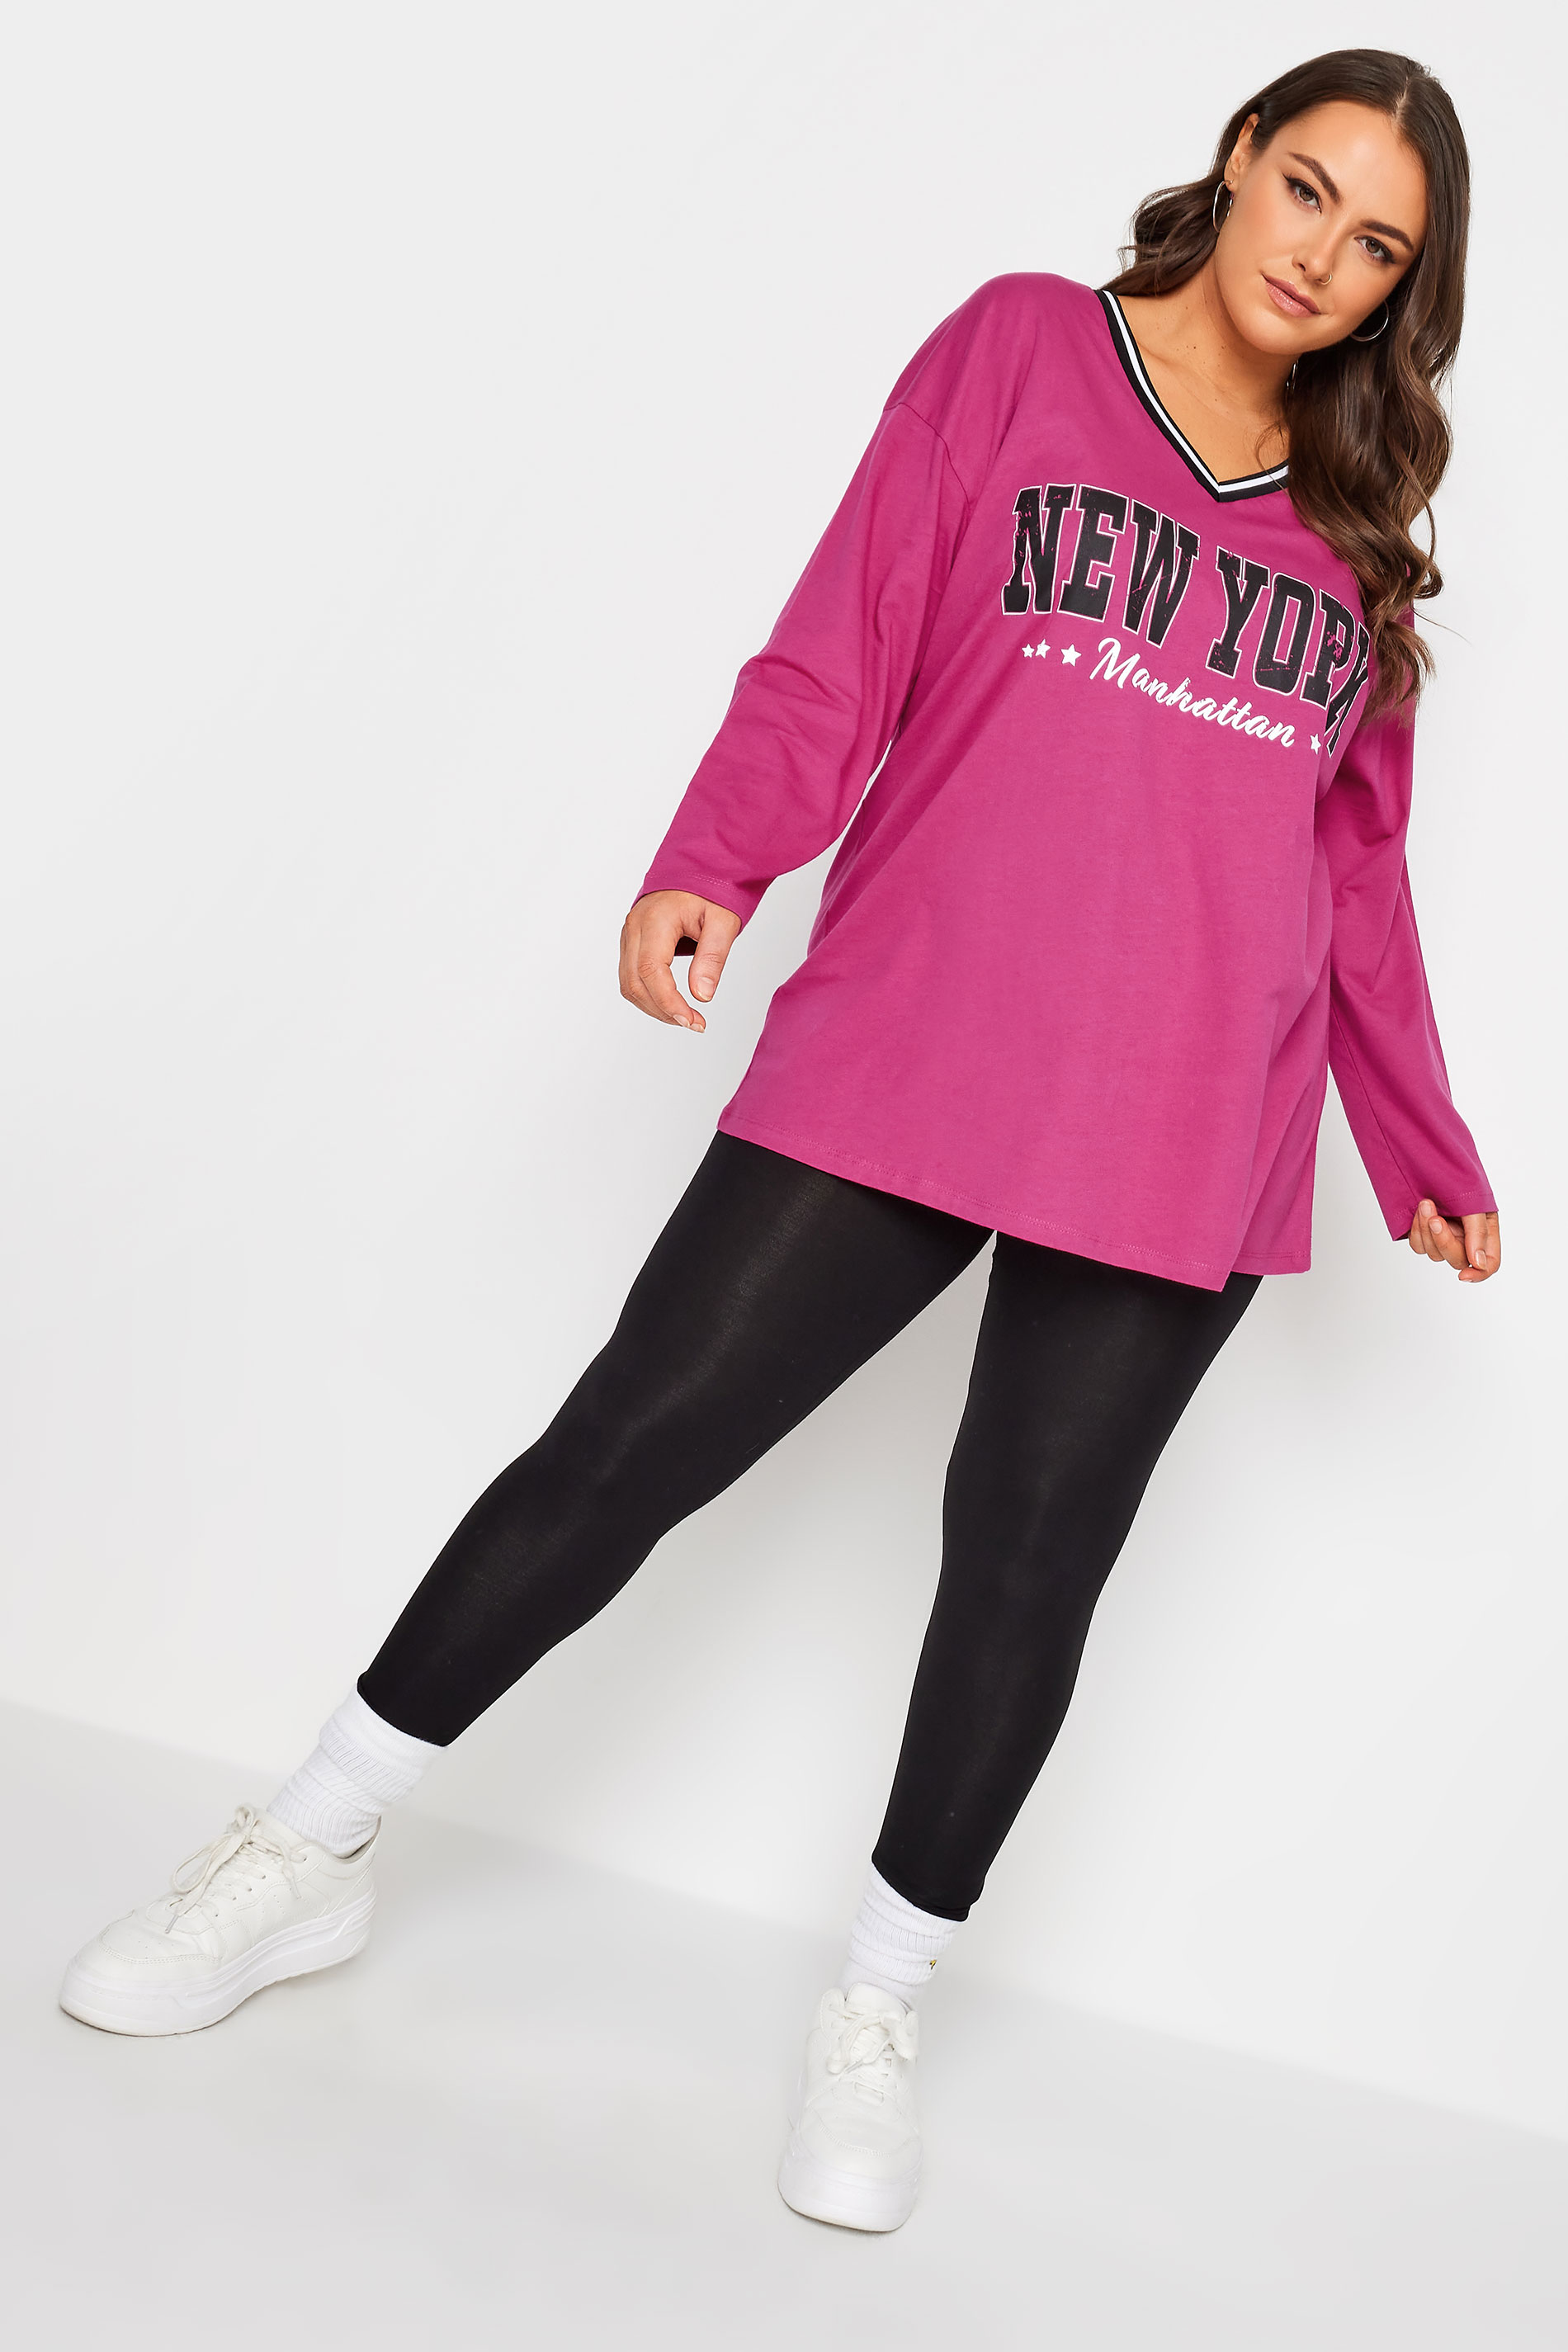 YOURS Plus Size Pink 'New York' Varsity Oversized T-Shirt | Yours Clothing 2